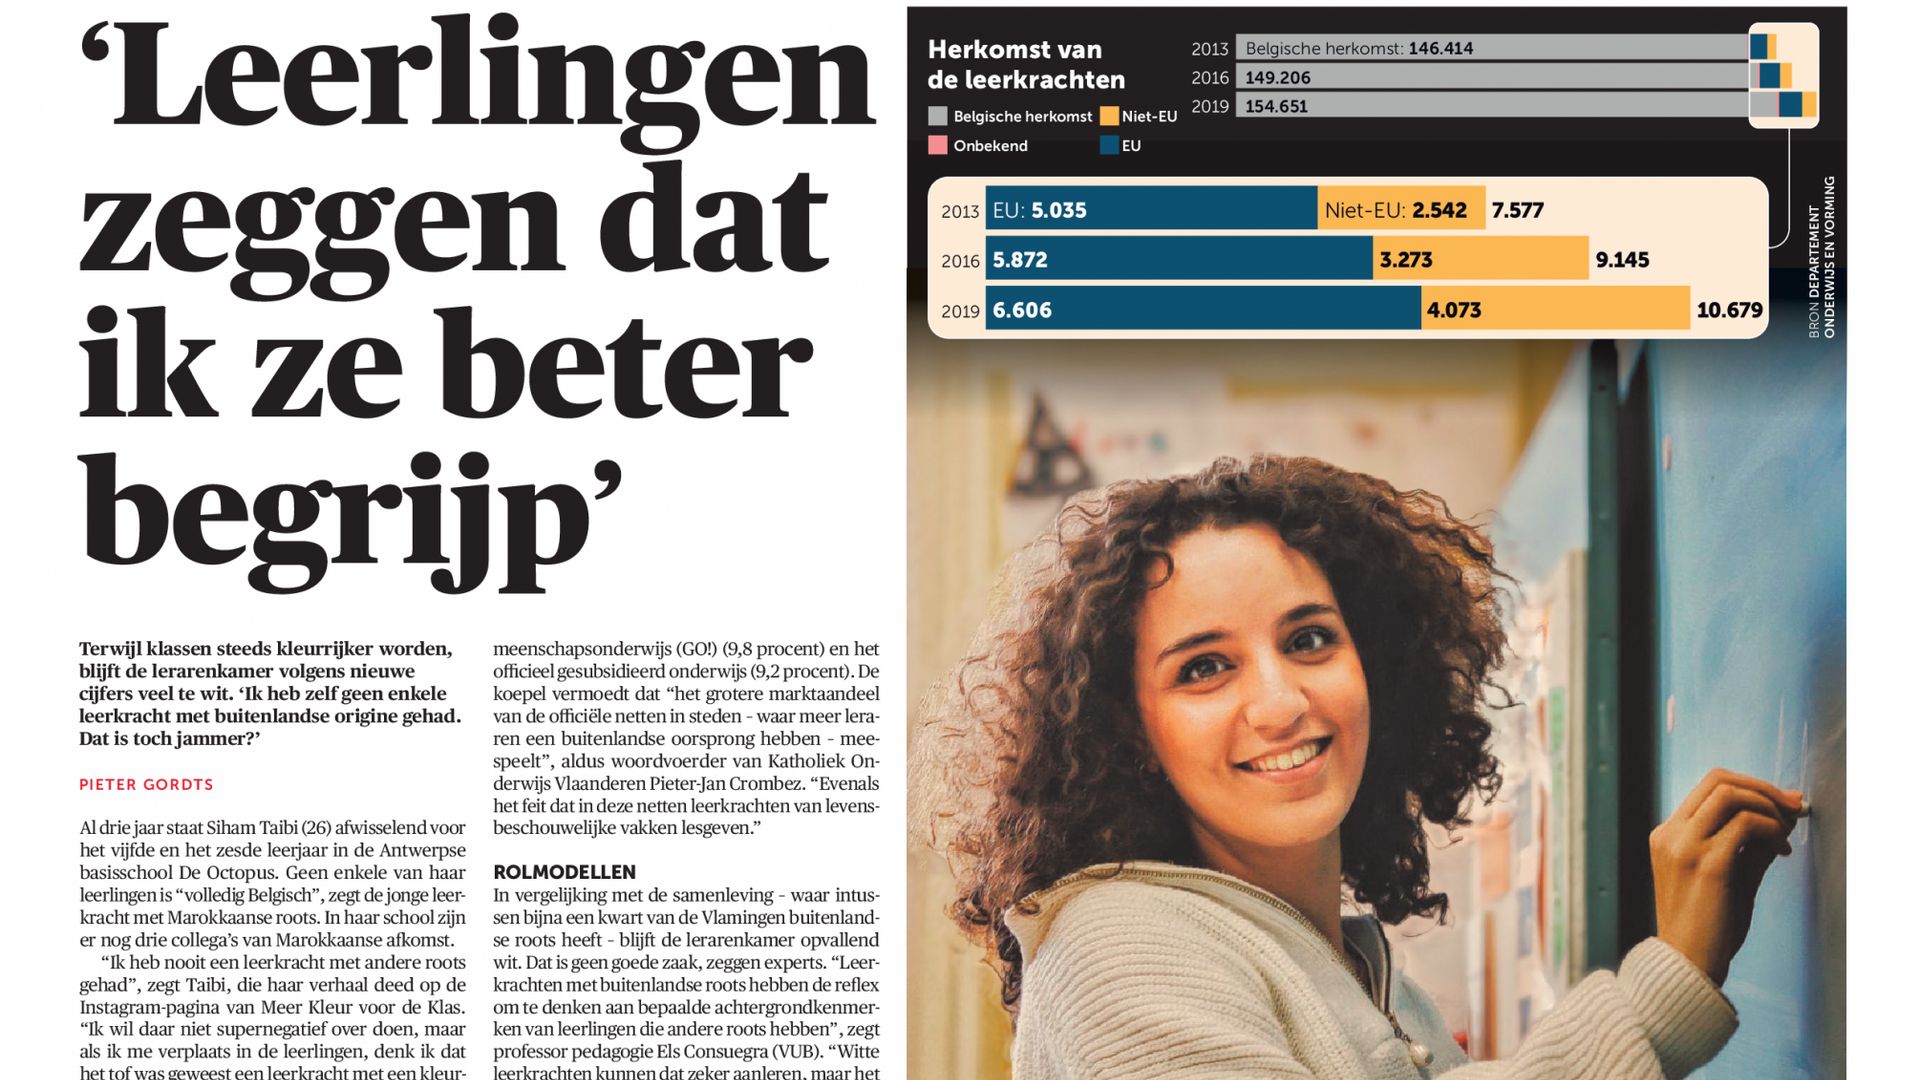 Article du quotidien flamand De Morgen.